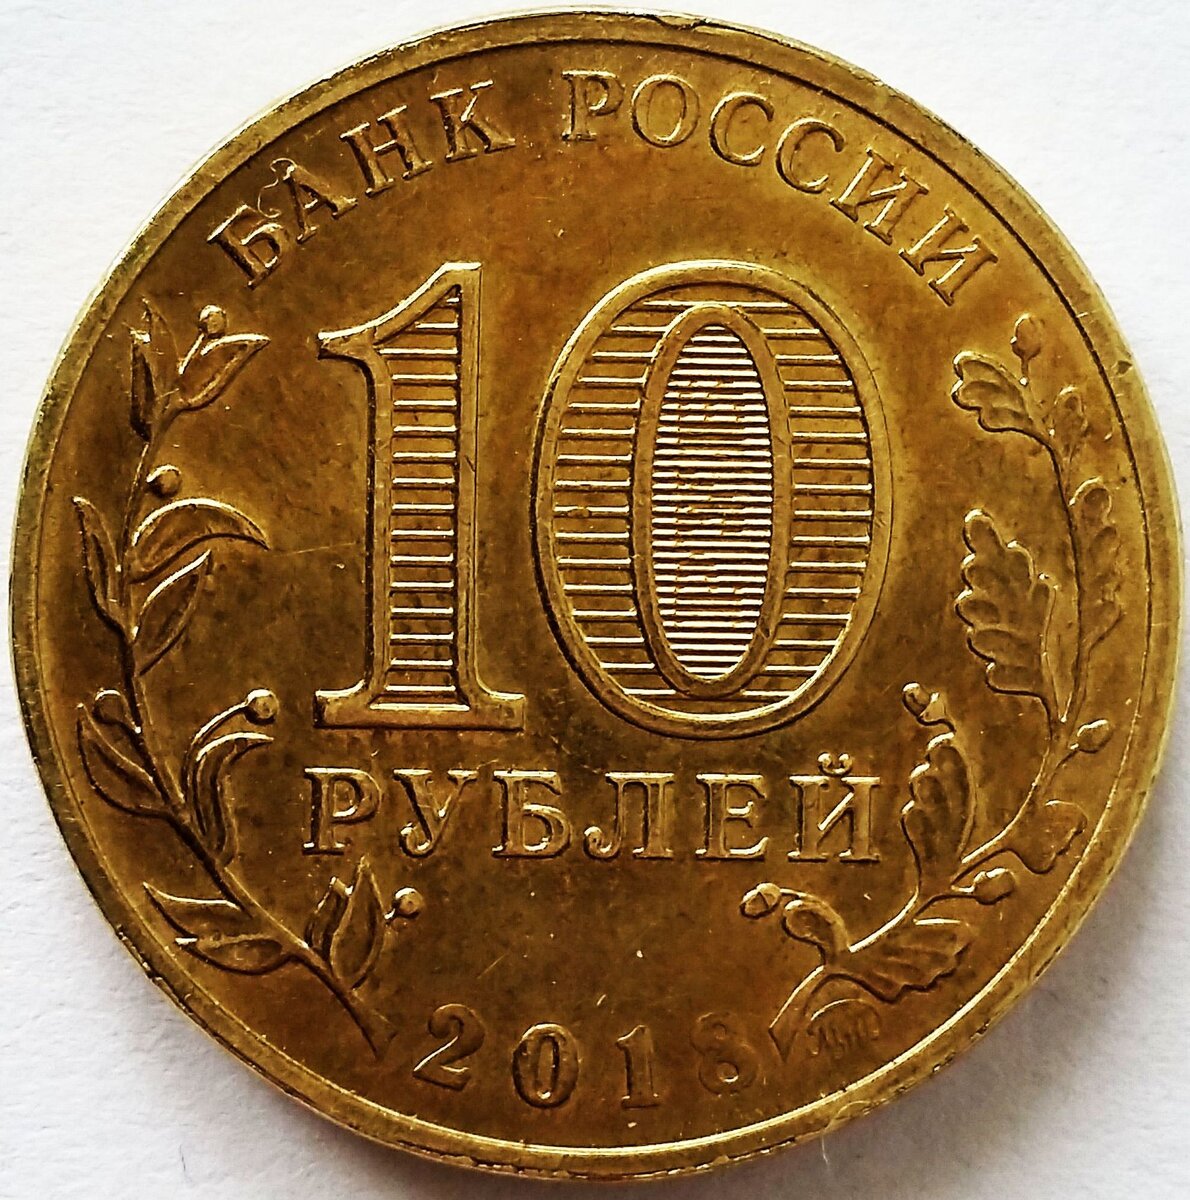 Steam рубли по 10 рублей фото 91